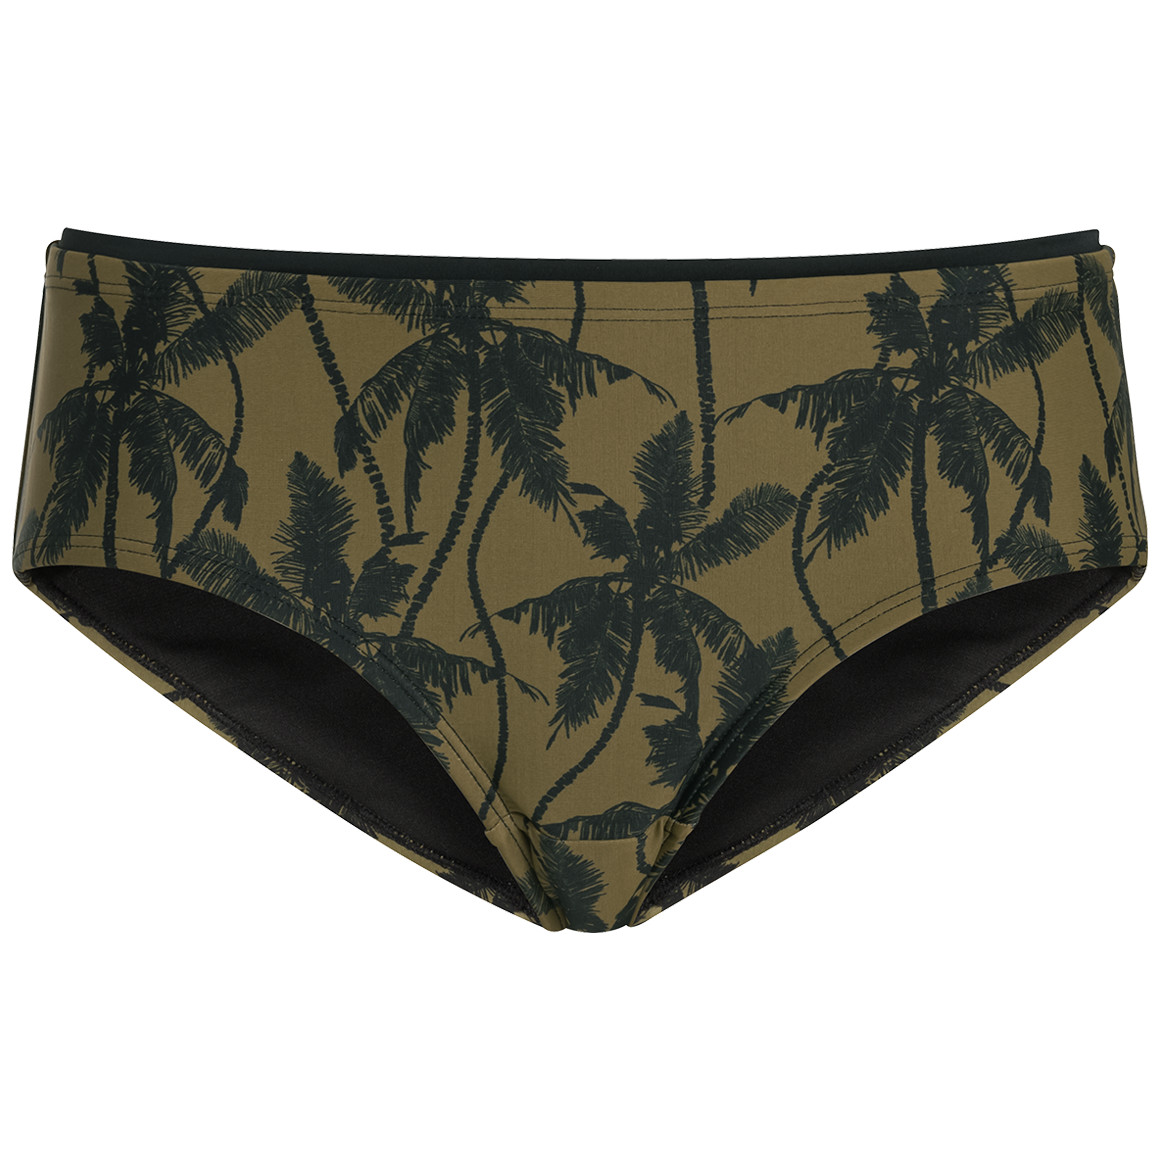 Damen Bikinipanty mit Palmen-Muster von Gina Benotti